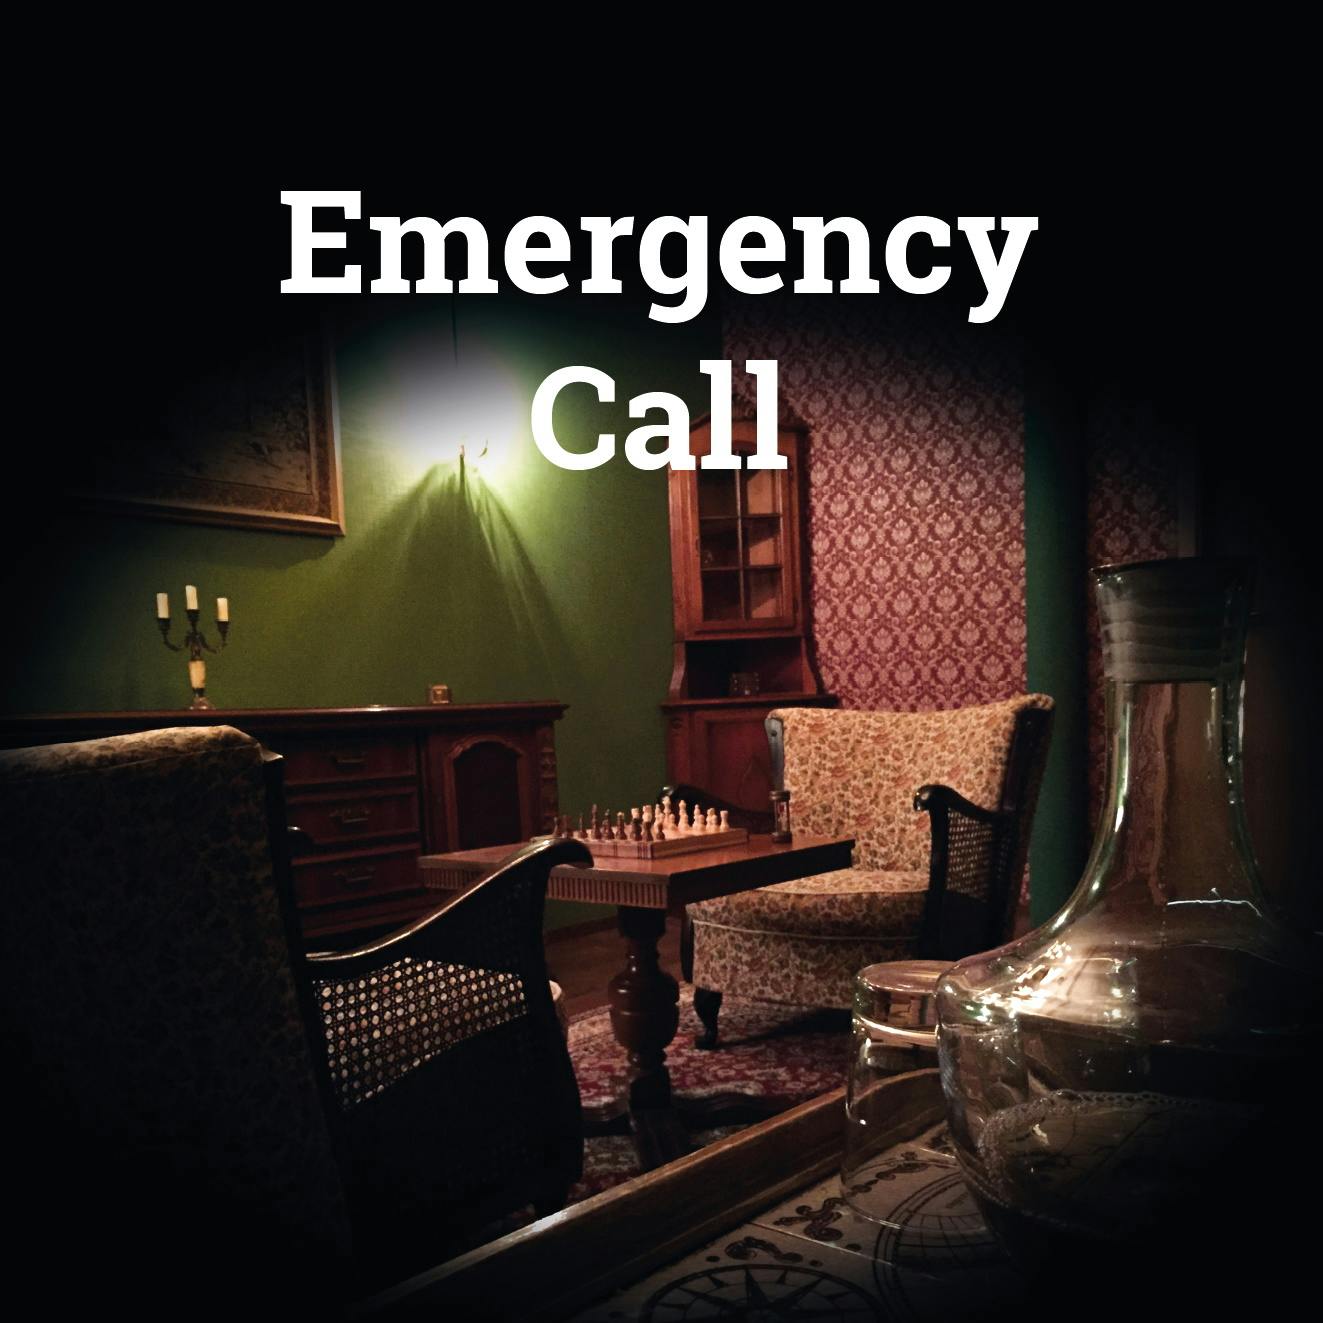 Escape Room Spiel "Emergency Call" in Saarbrücken